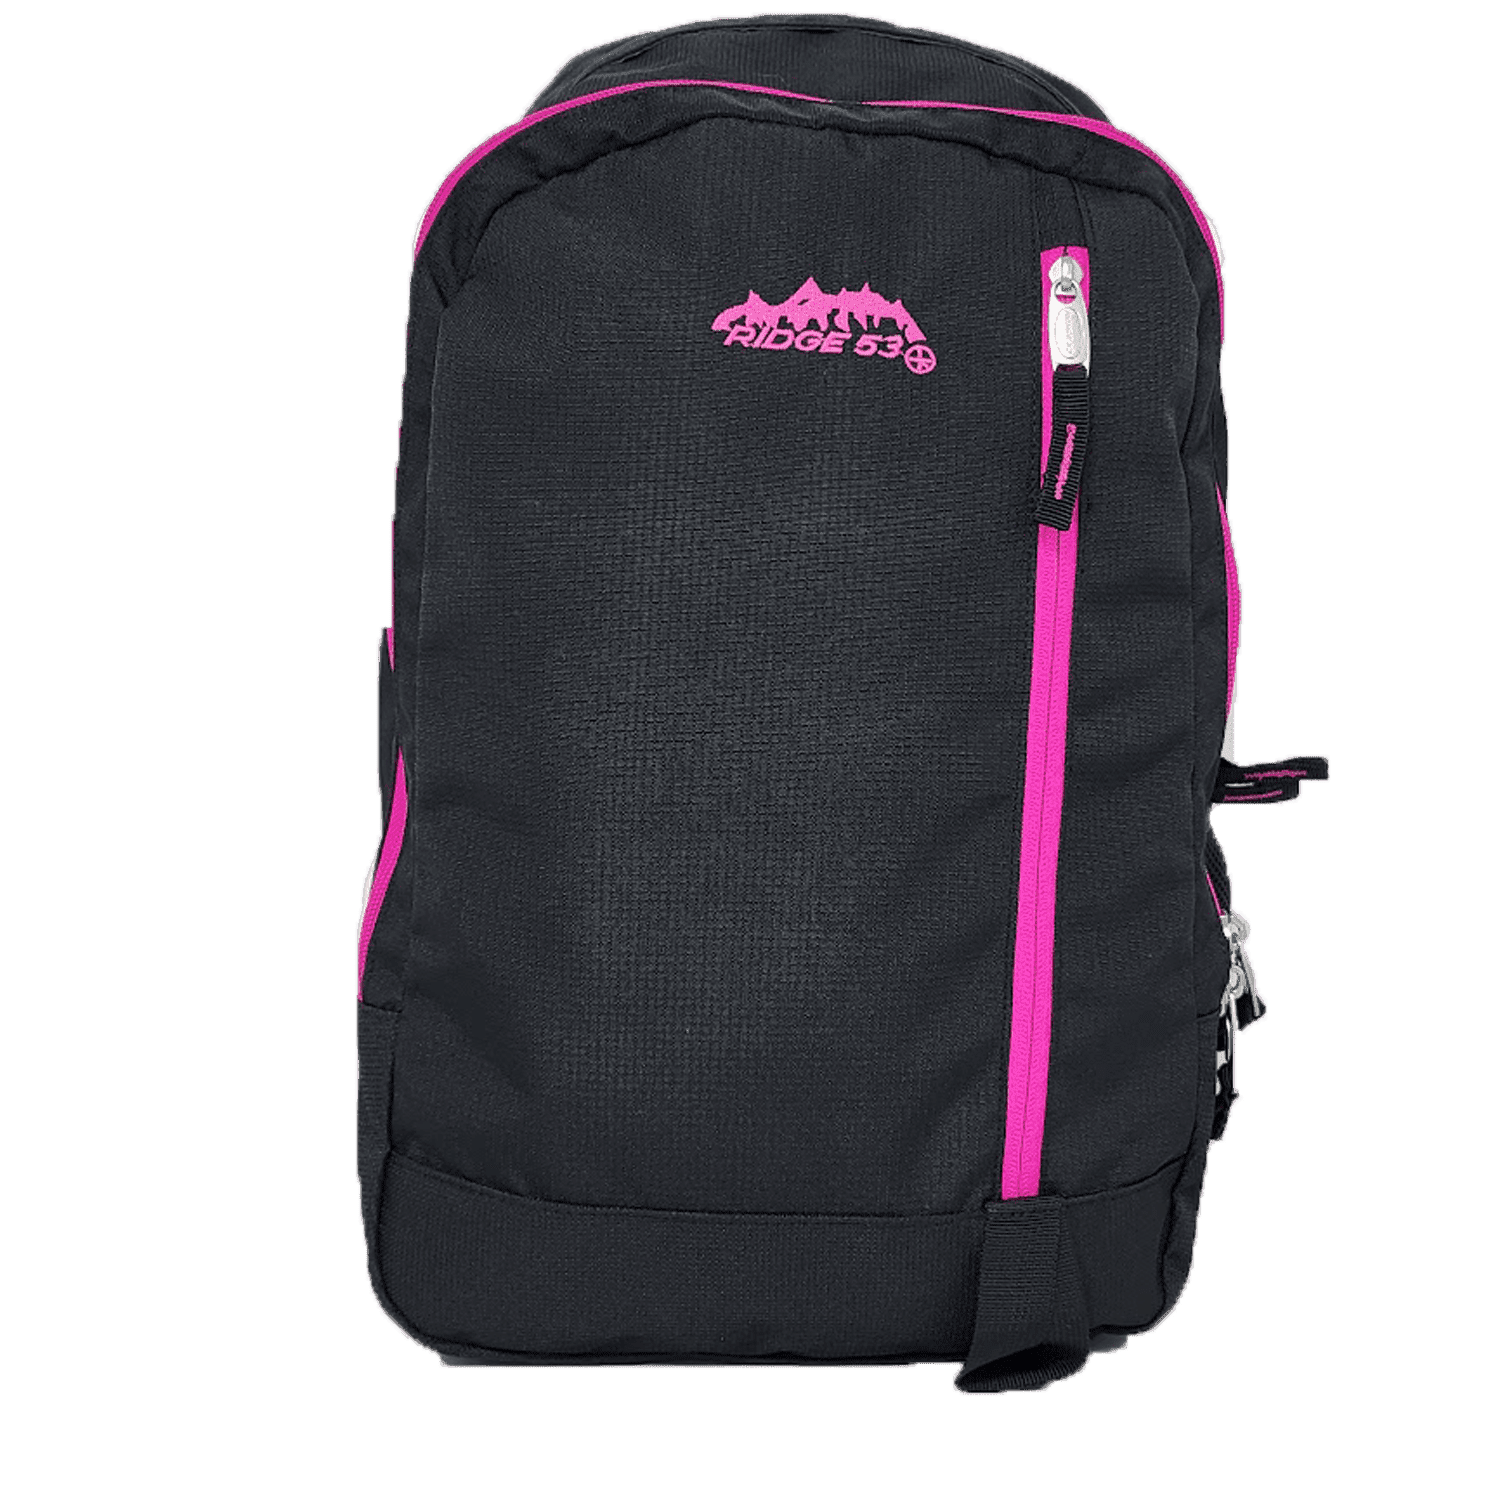 Sportech Ridge 53 – Dawson Backpack - Black/Pink 2 Shaws Department Stores